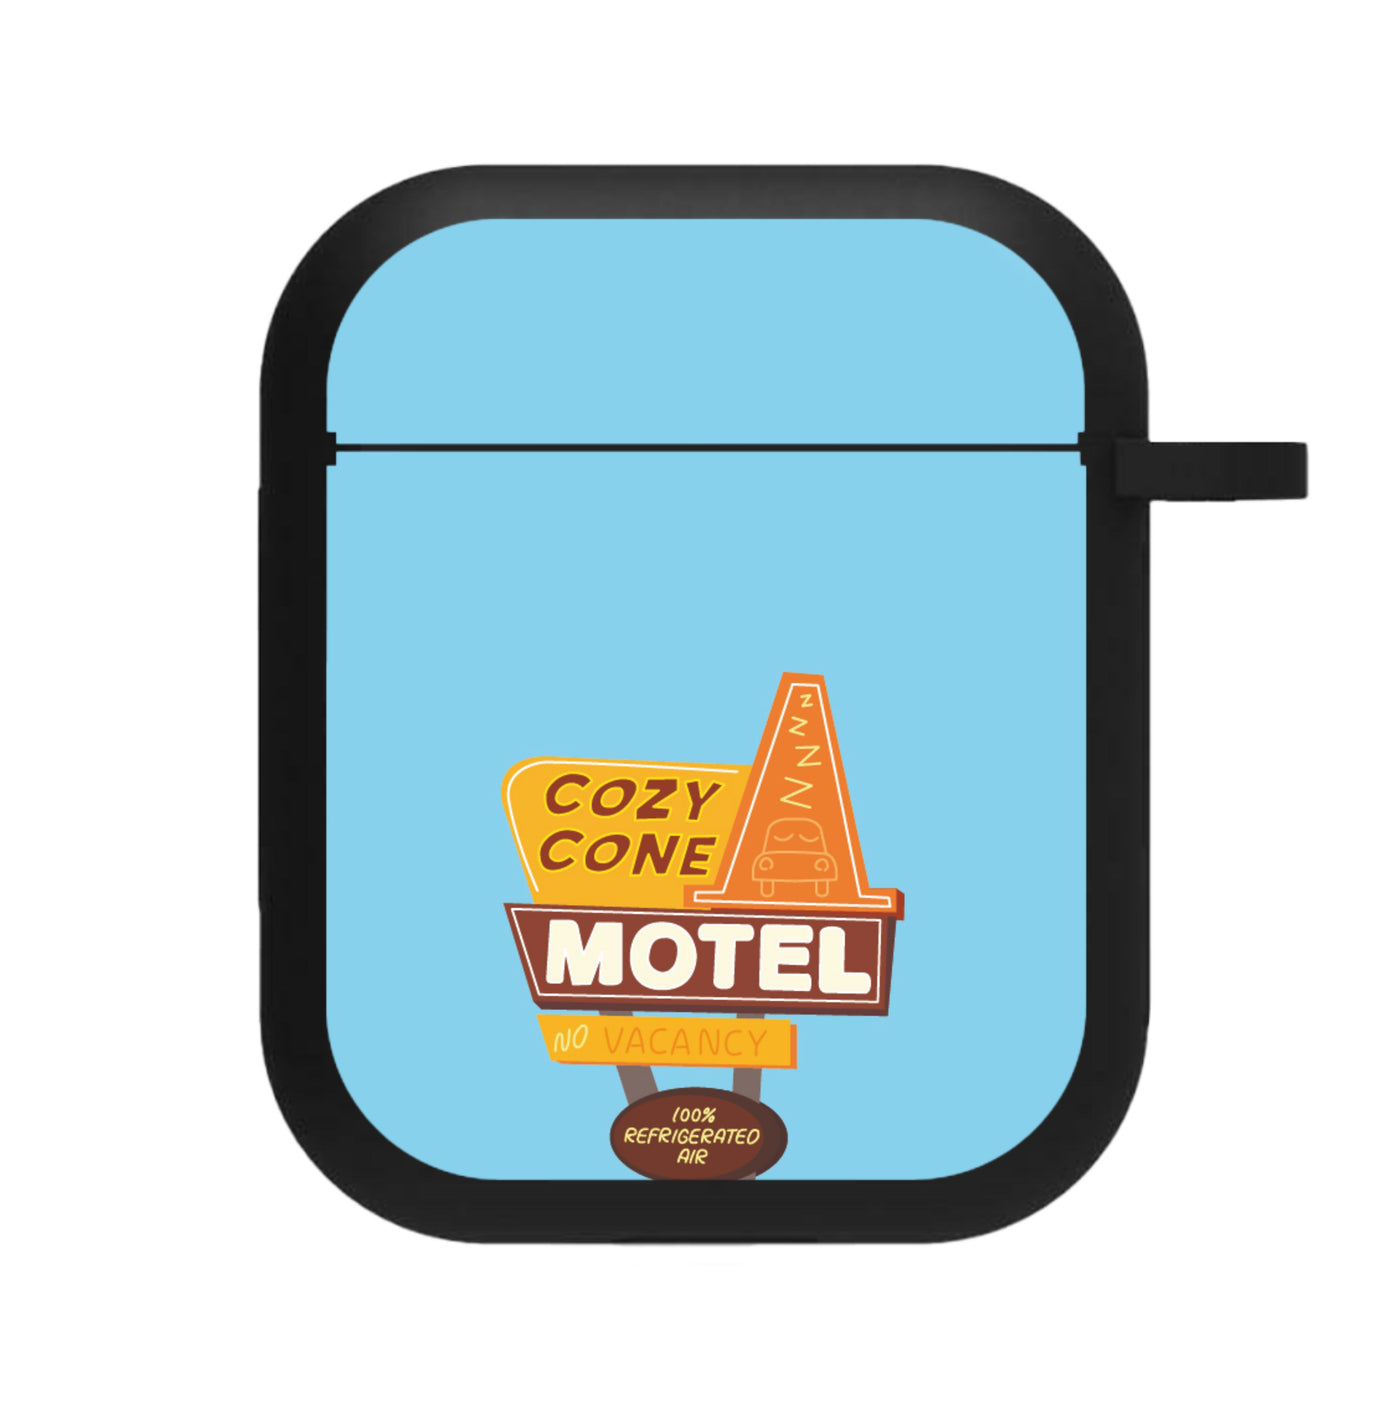 Cozy Cone Motel - Cars AirPods Case